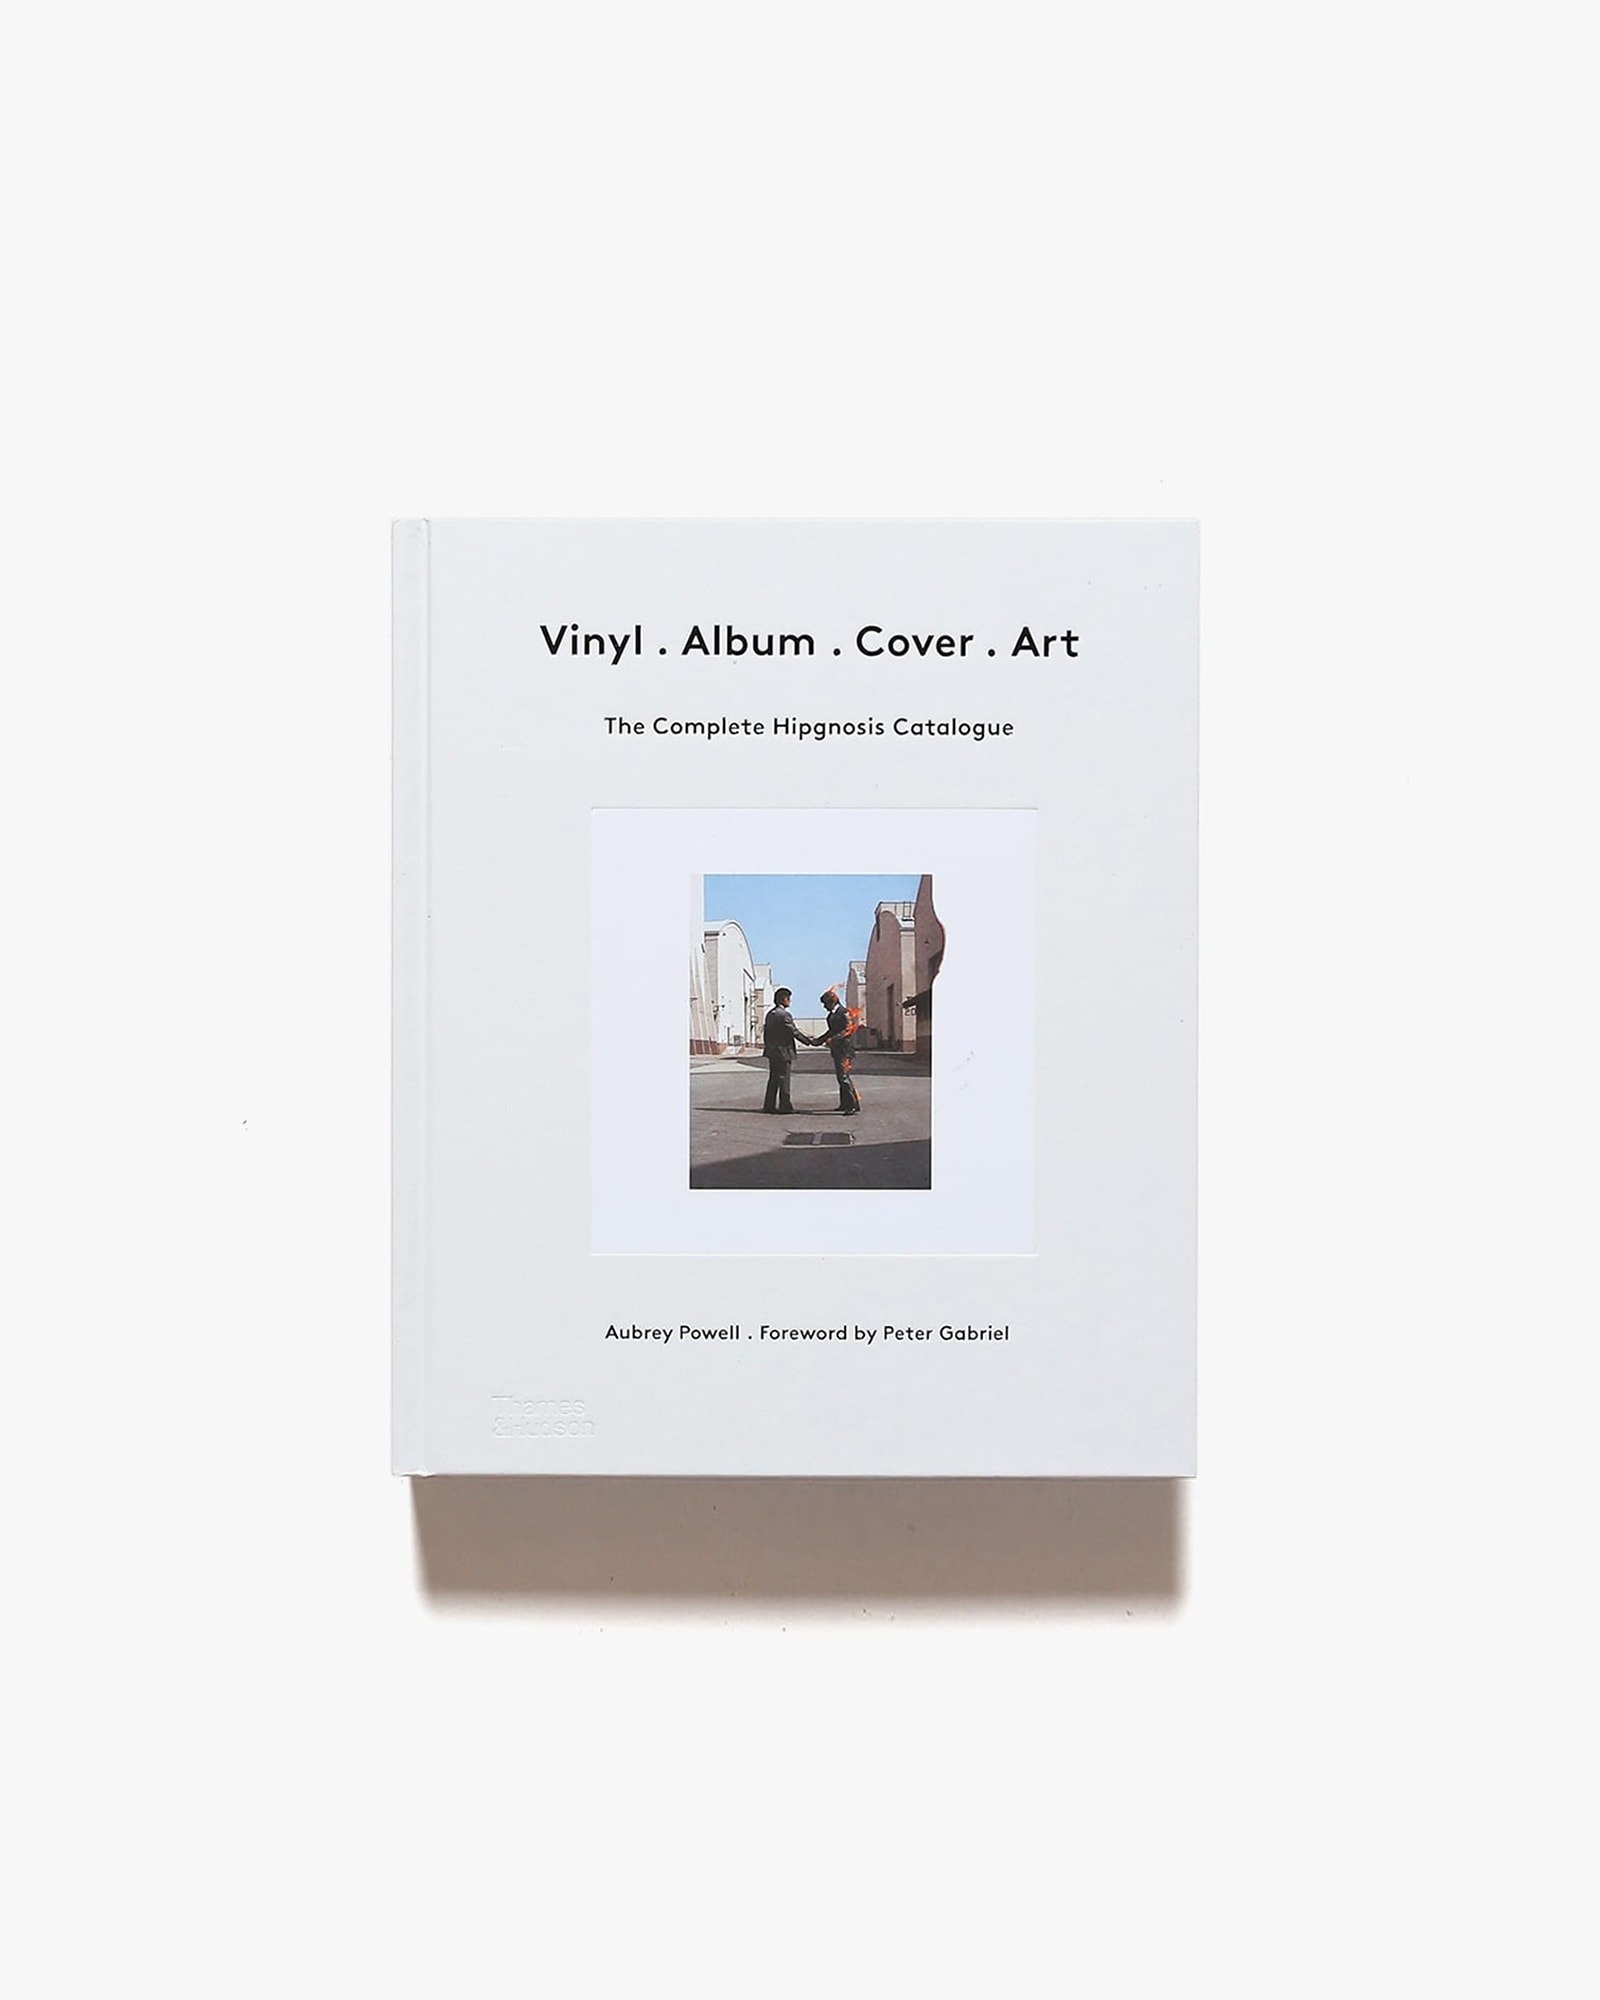 Vinyl. Album. Cover. Art: The Complete Hipgnosis Catalogue